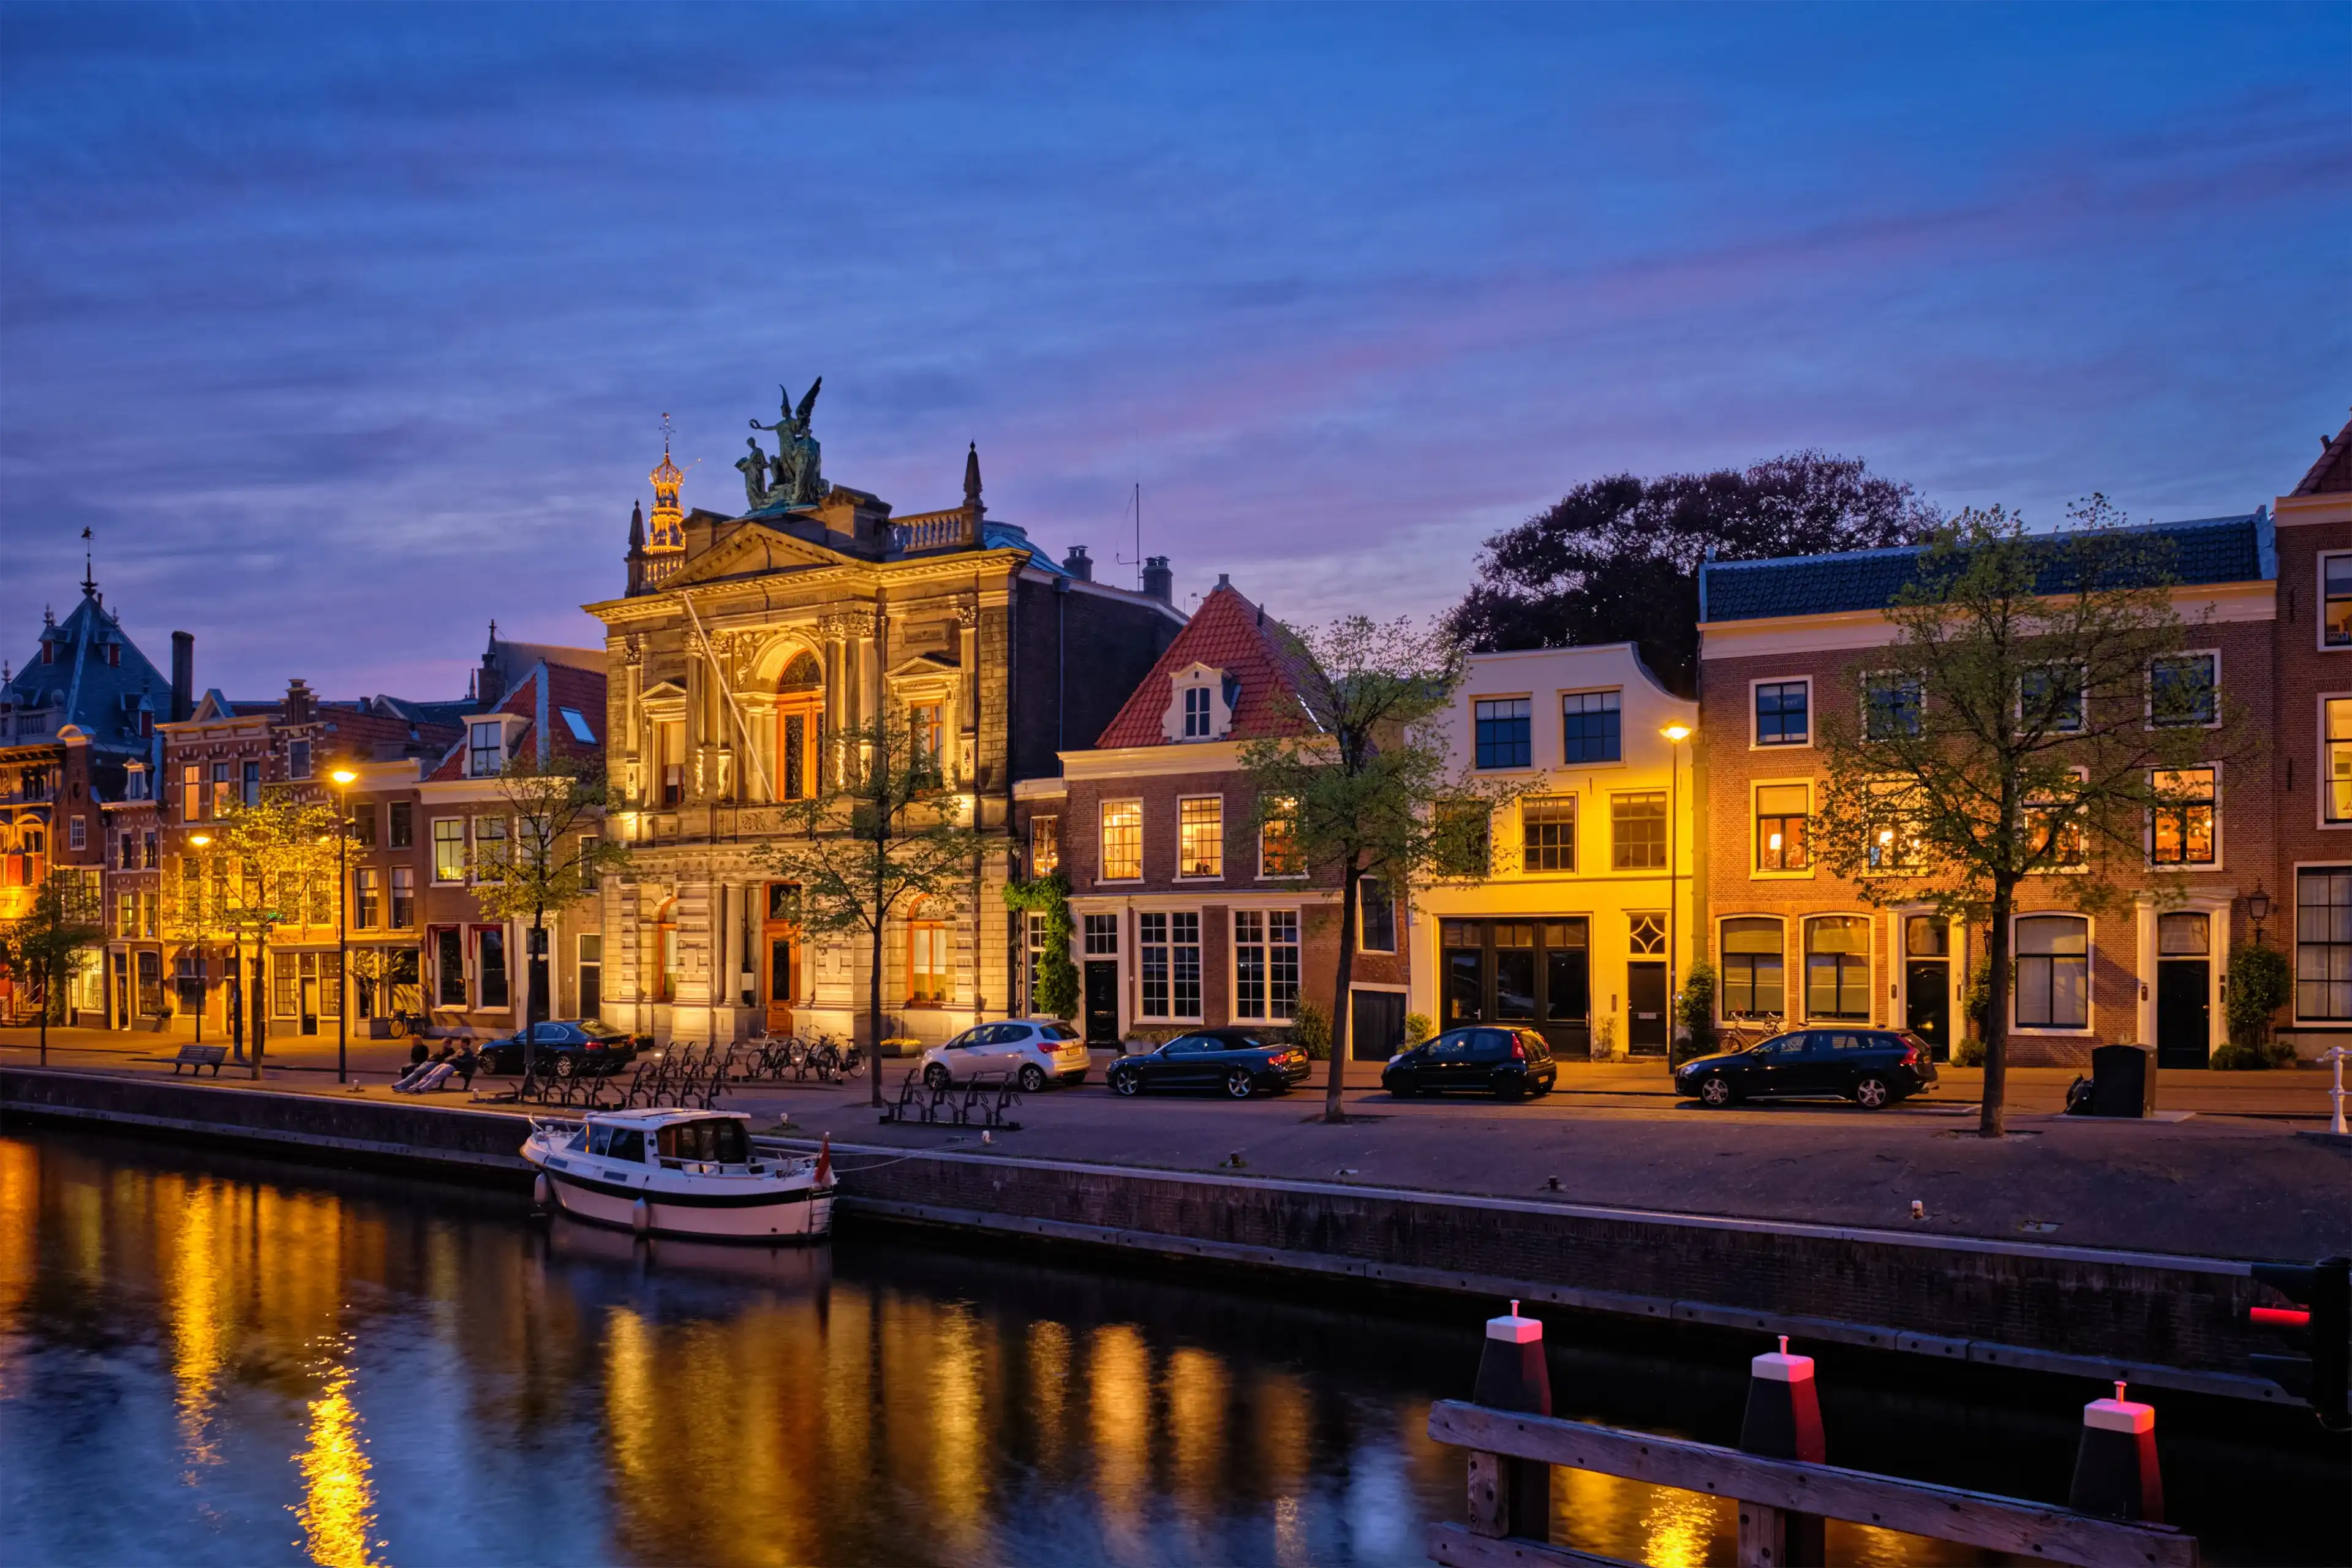 Best Haarlem hotels. Cheap hotels in Haarlem, Netherlands